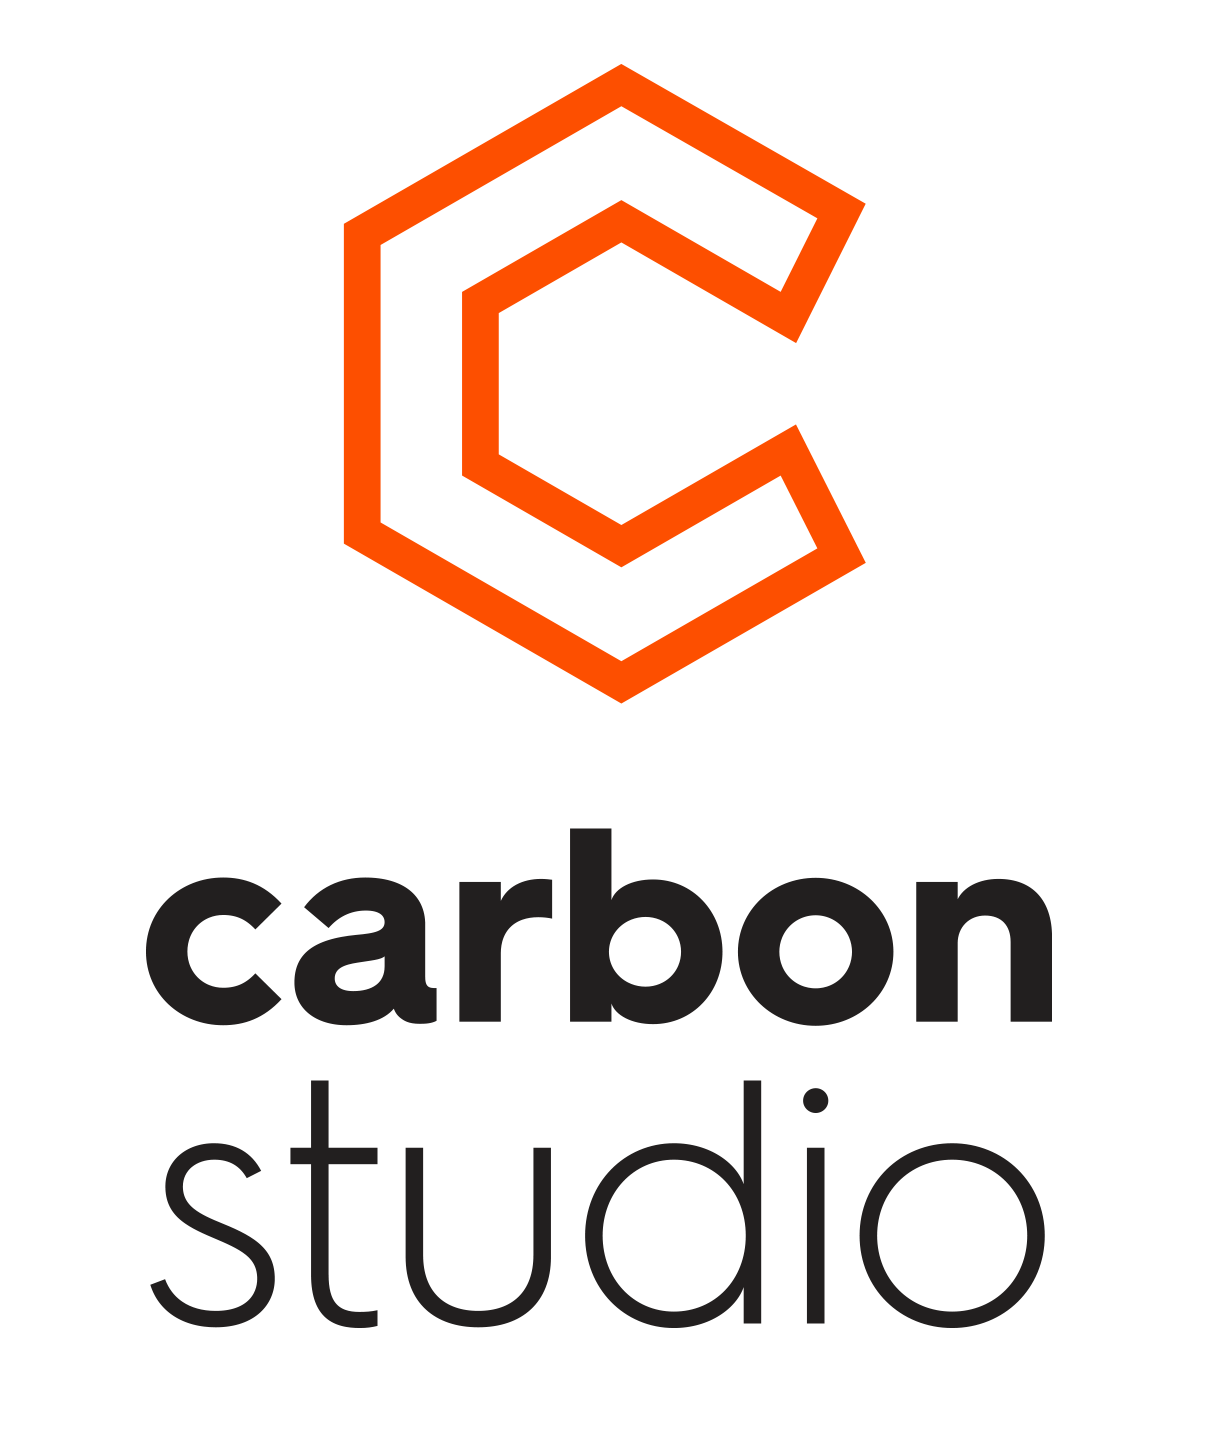 Kit carbon studio lenovo thinkpad twist deals